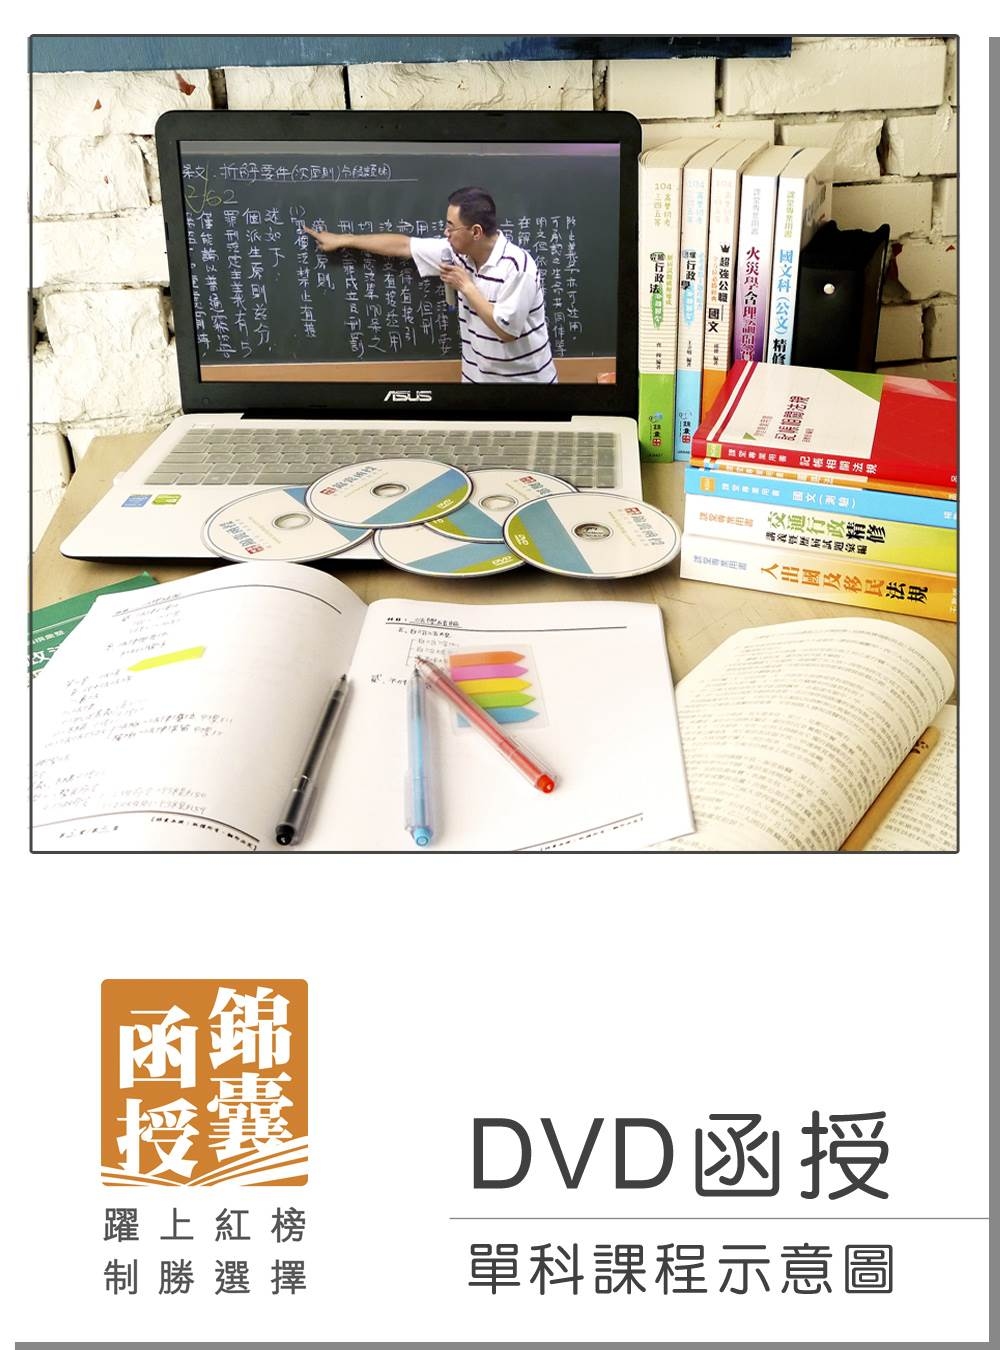 【DVD函授】移民政策與法規-單科課程(105版)